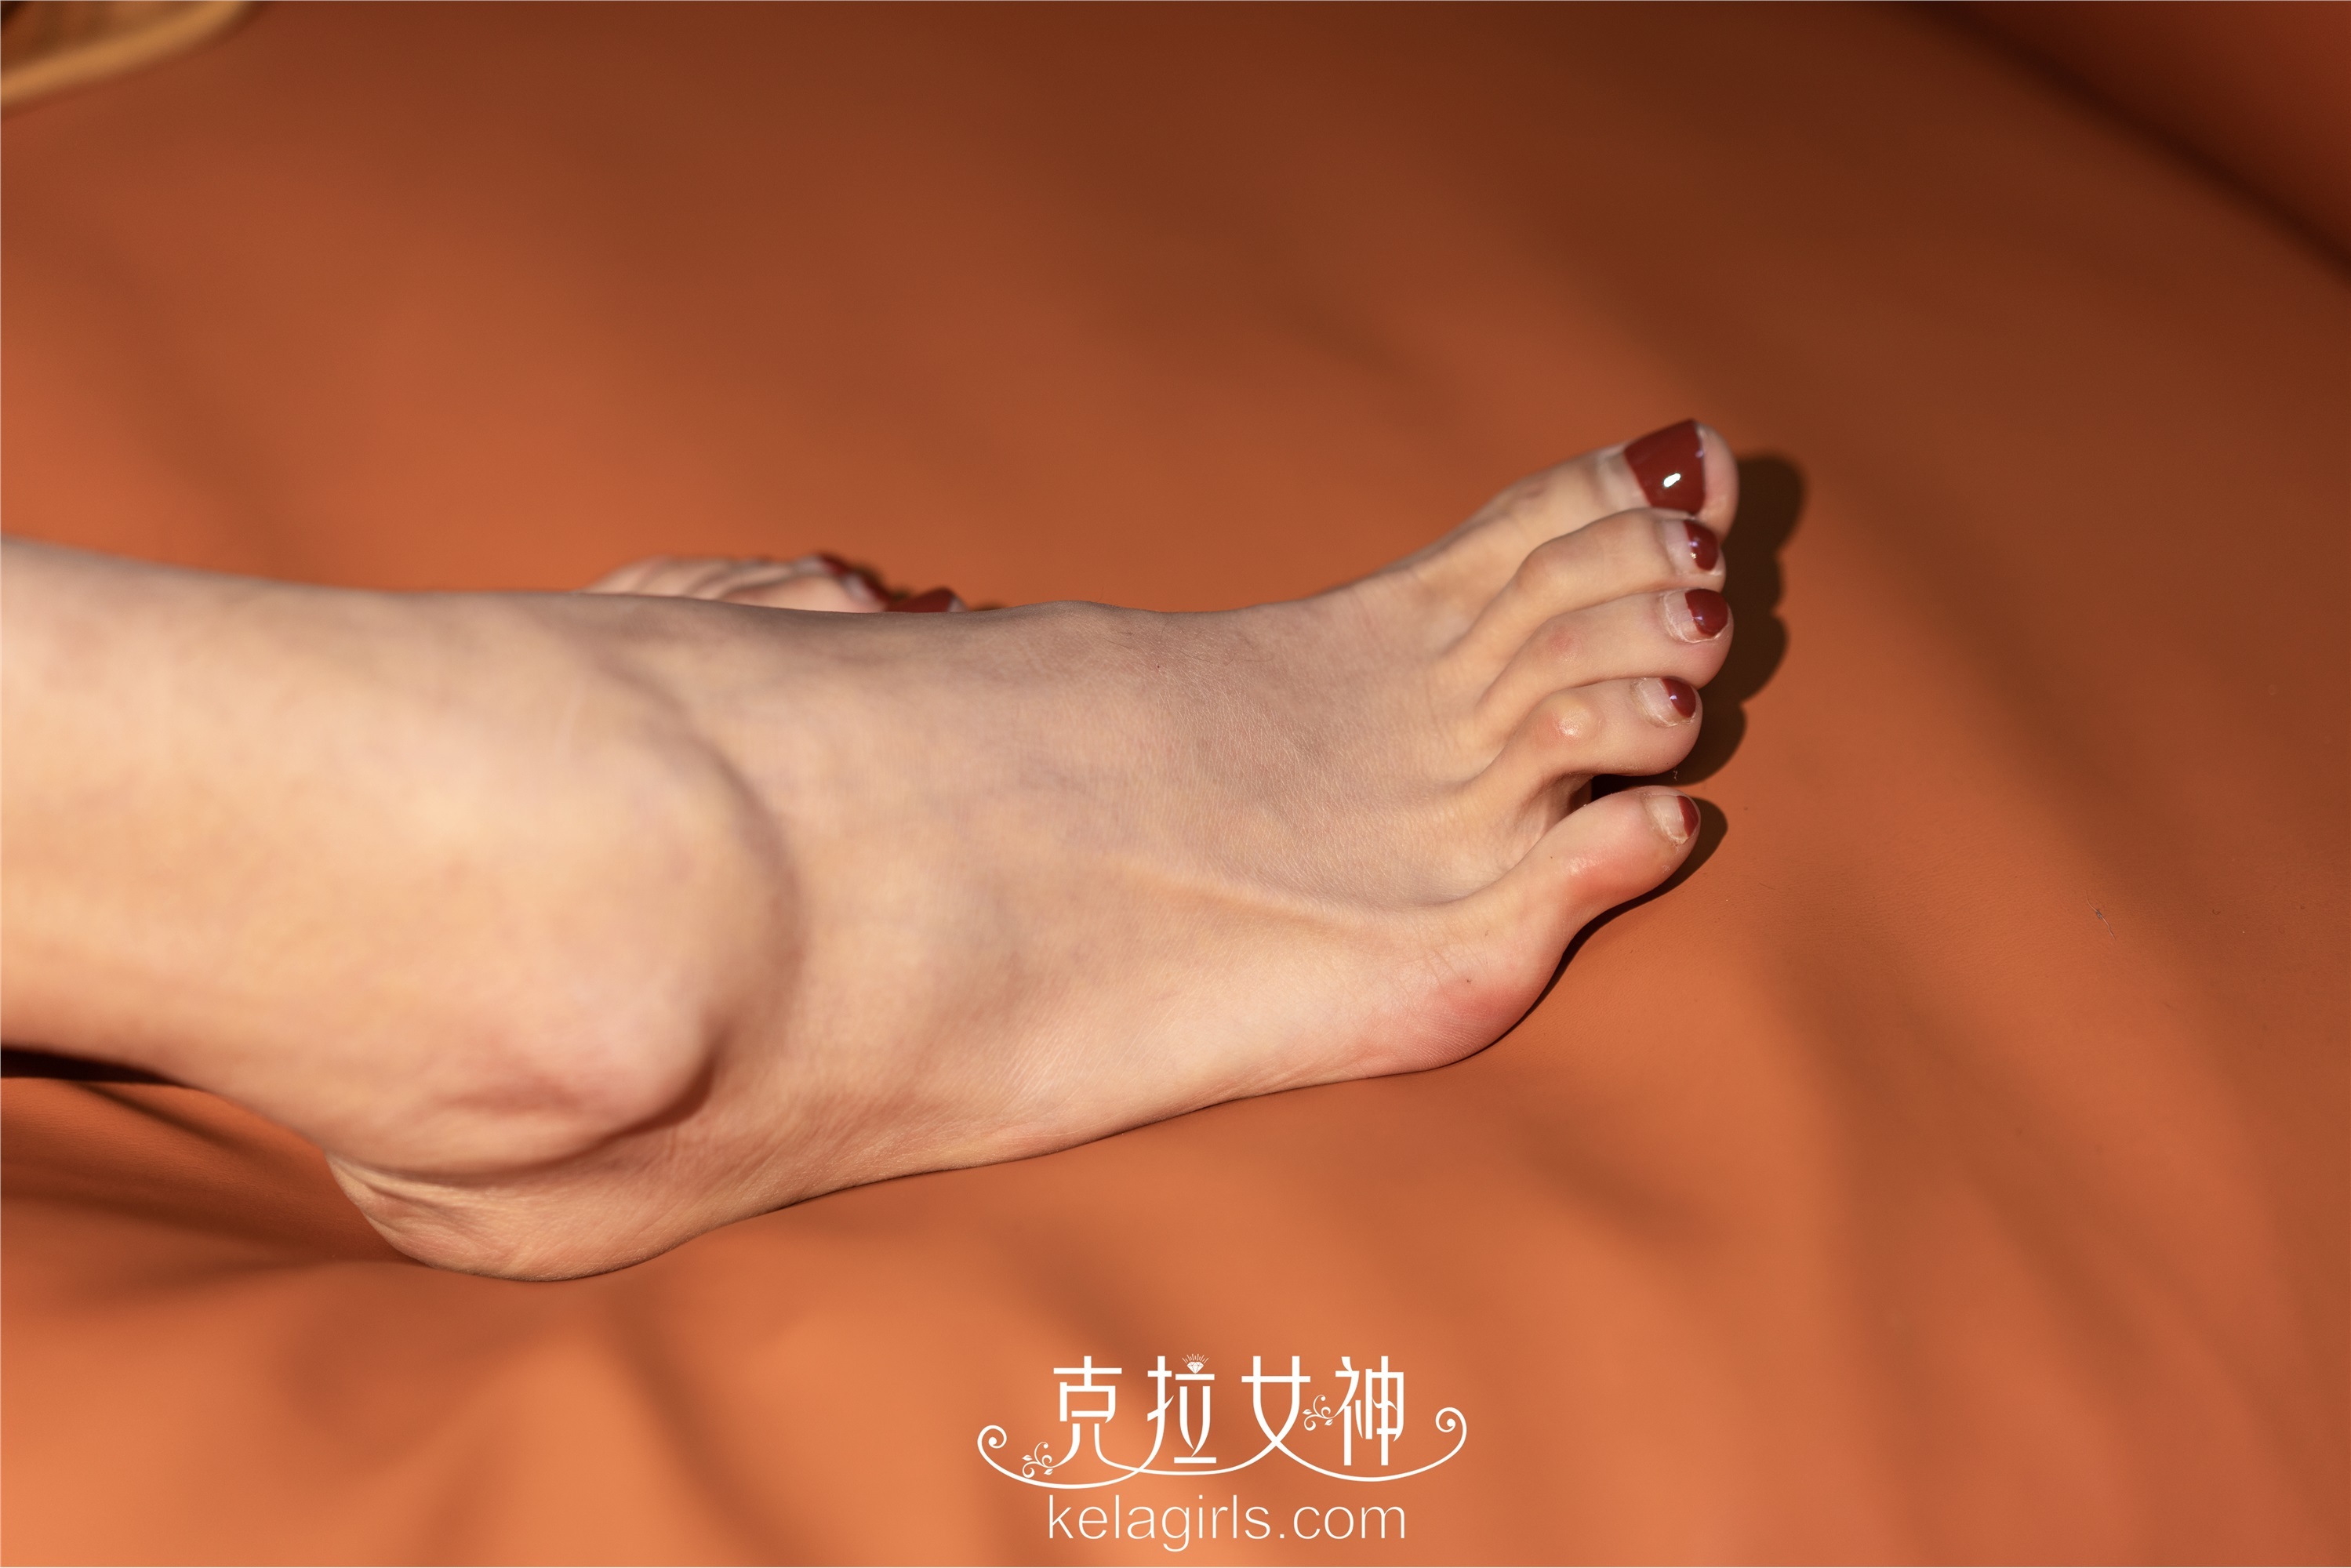 2020.06.03 Drunk posture rhyme foot Wang Rui